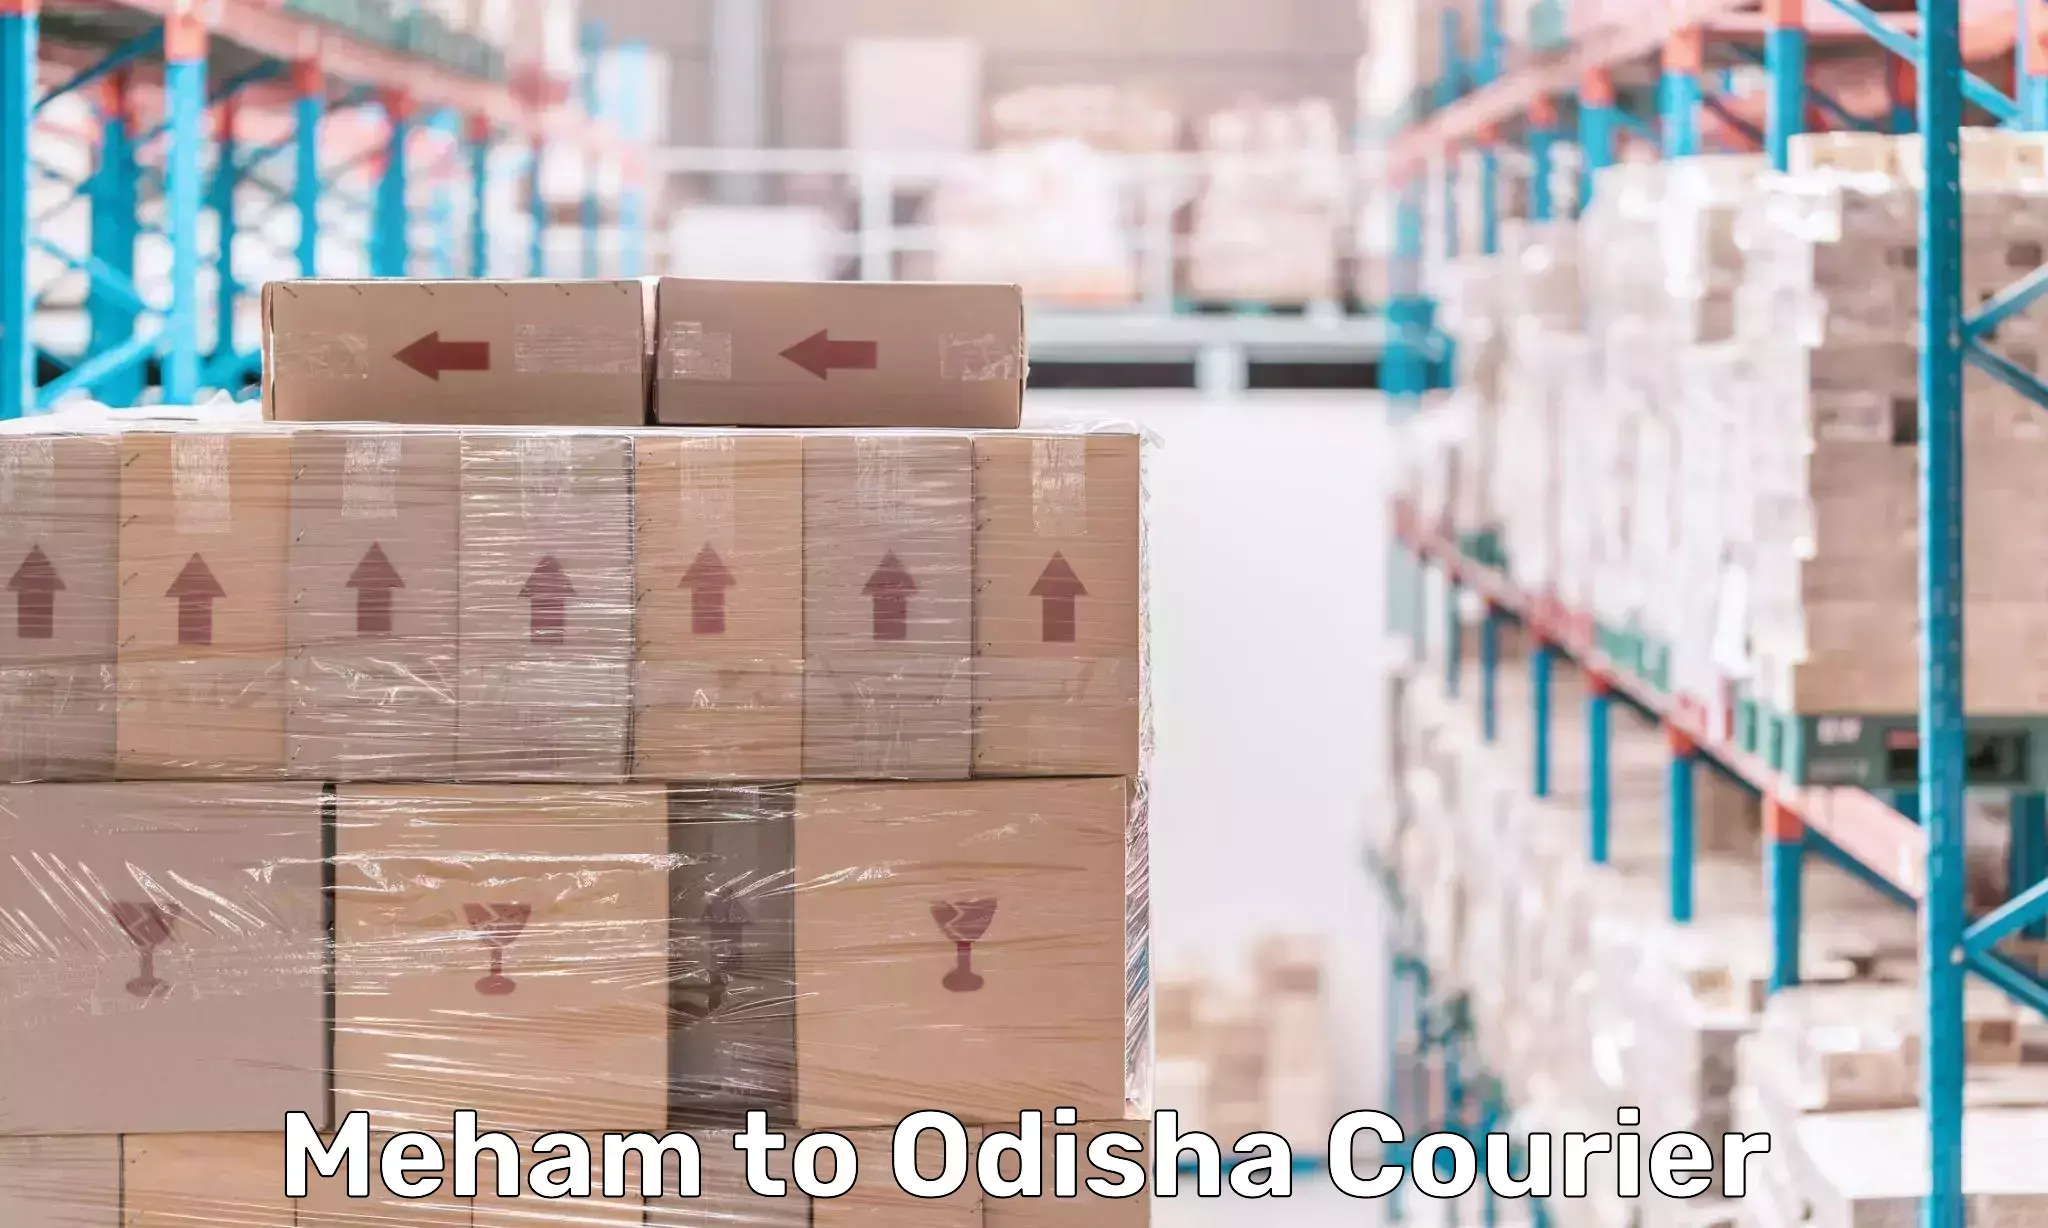 Courier service comparison Meham to Odisha